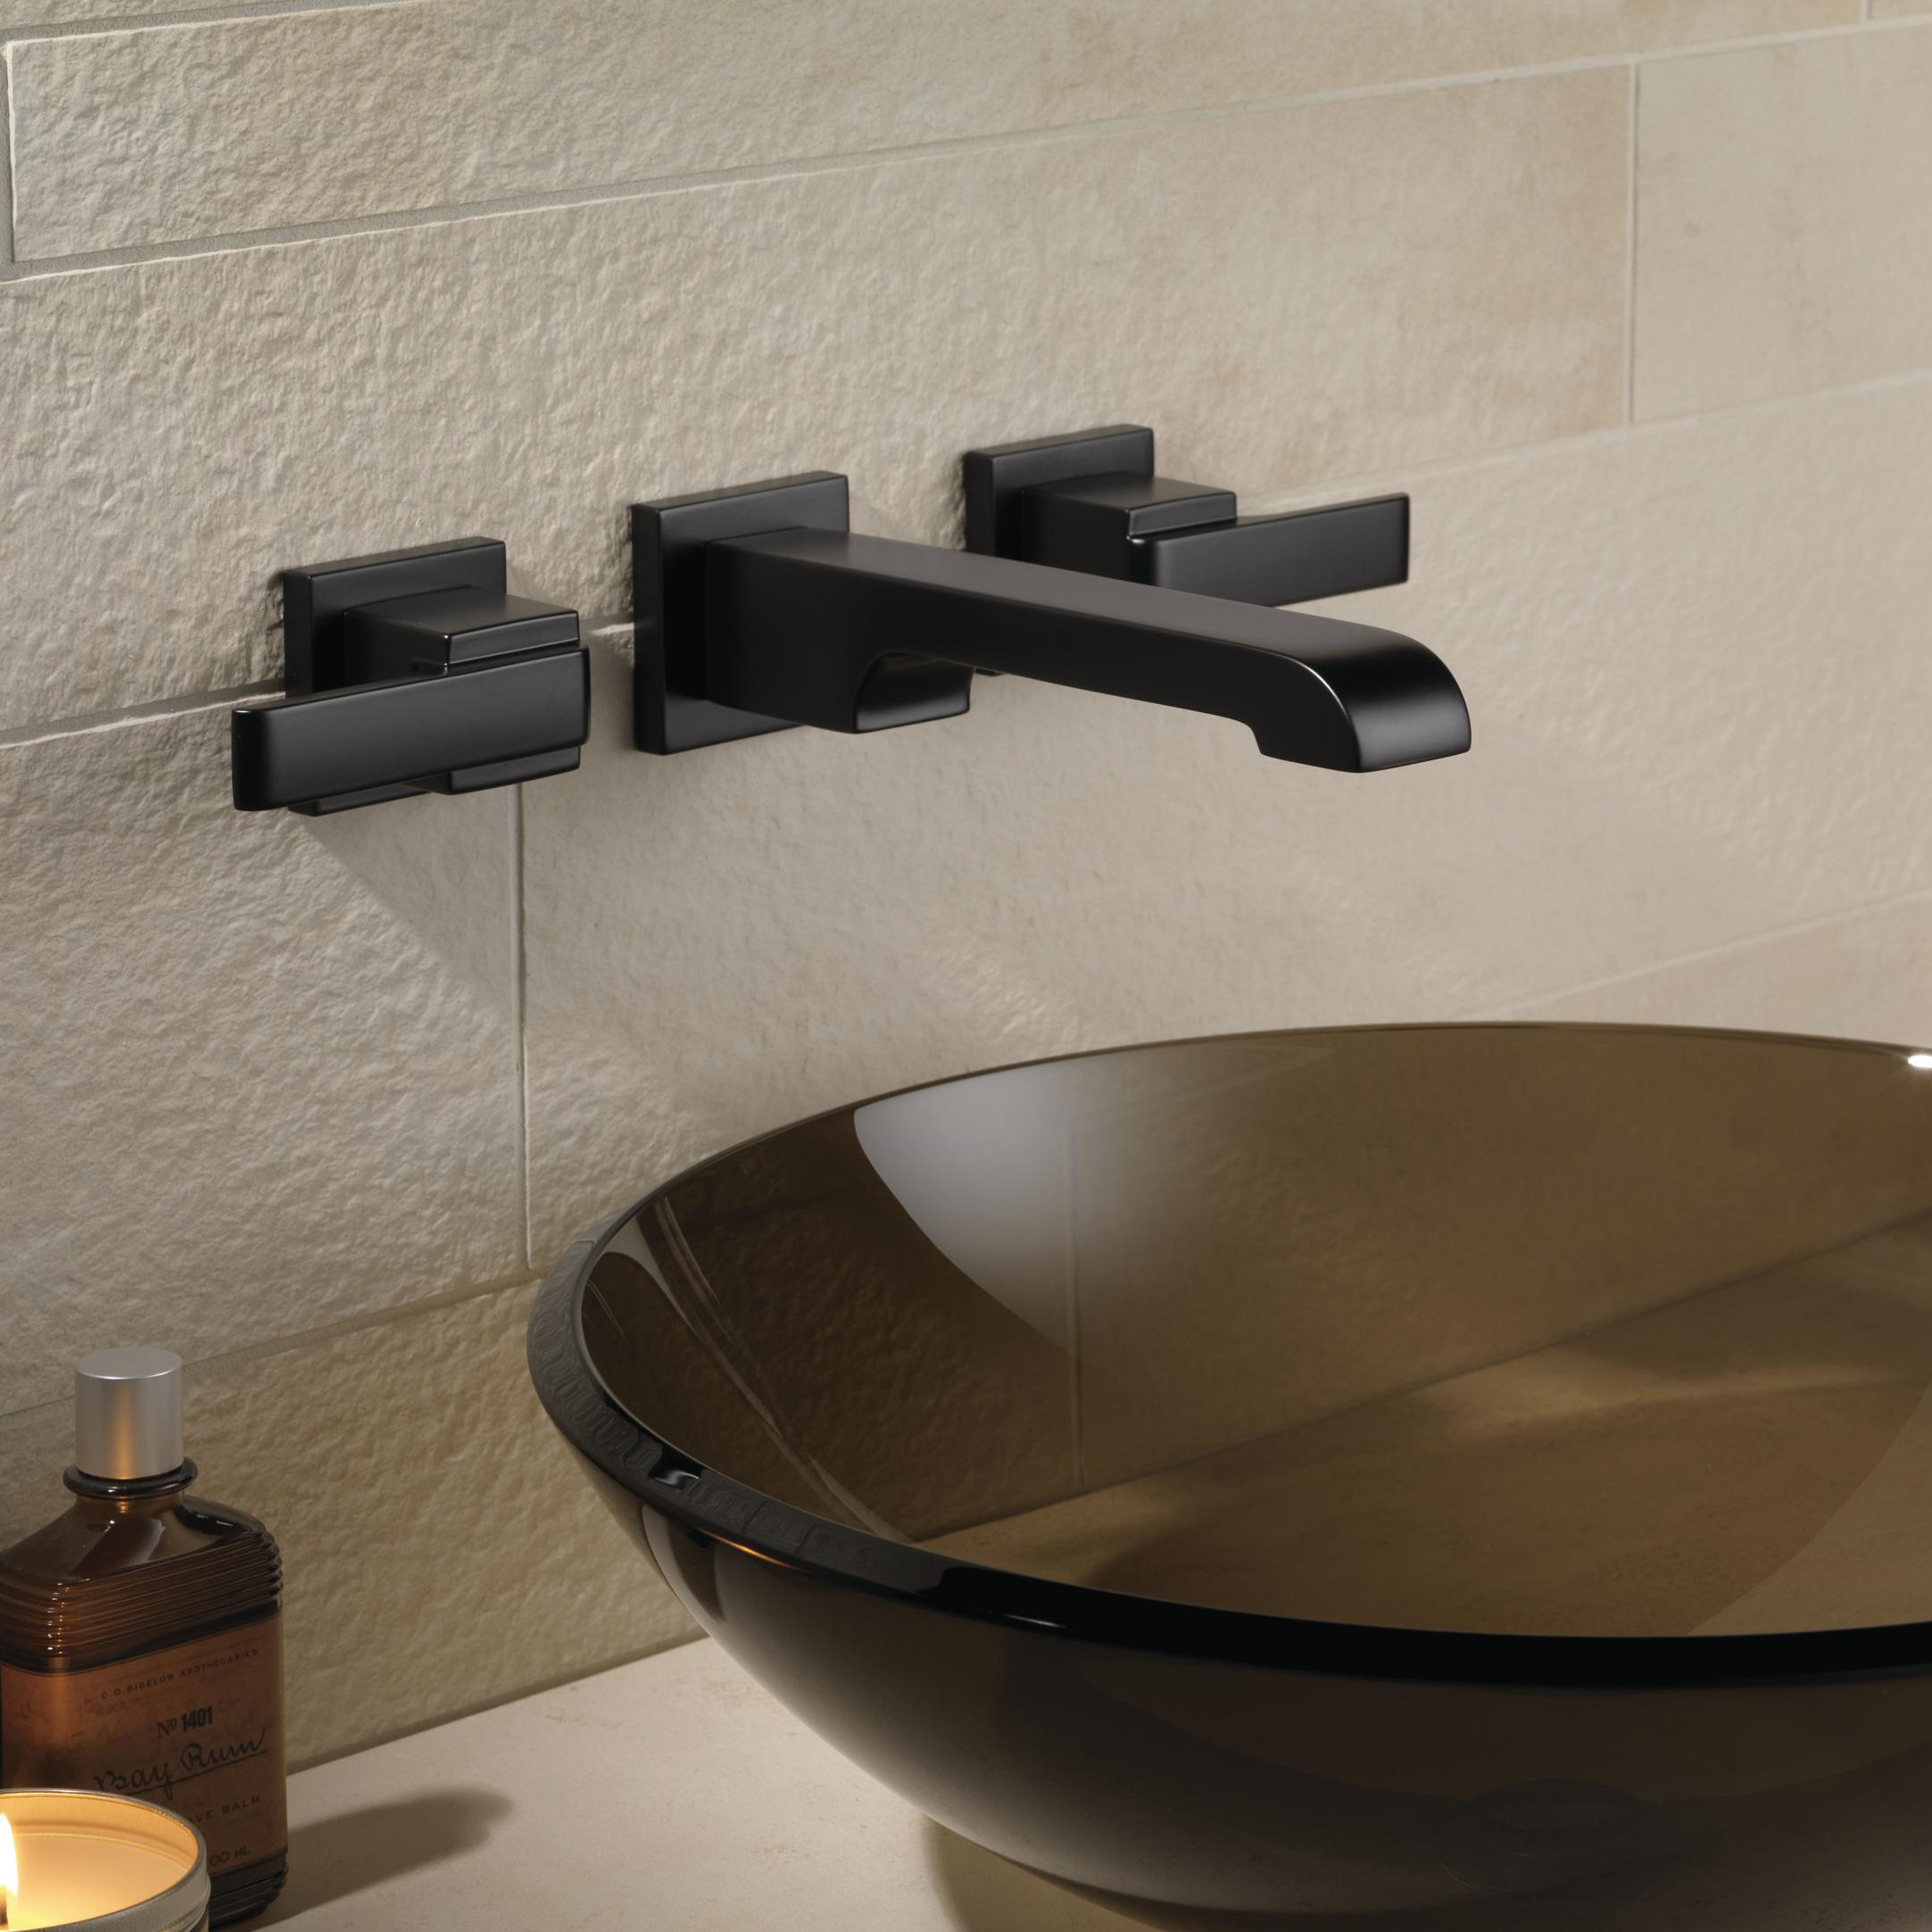 T3567lf Wl Sswl Blwl Delta Ara Two Handle Wall Mounted Bathroom Faucet Reviews Wayfair